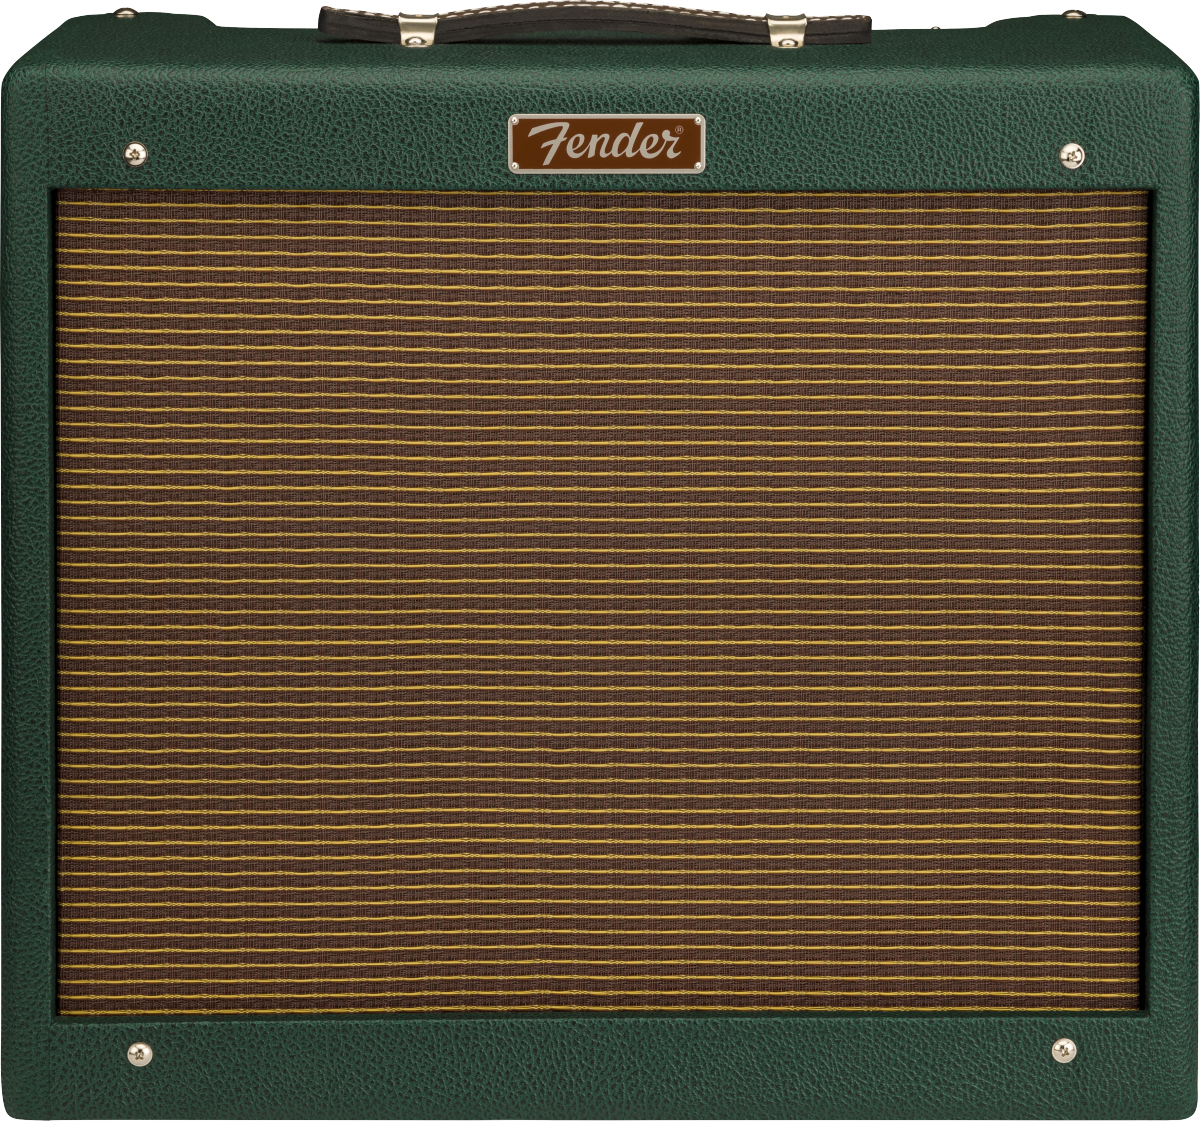 Fender Dealer Exclusive Blues Junior IV, British Racing Green : photo 1